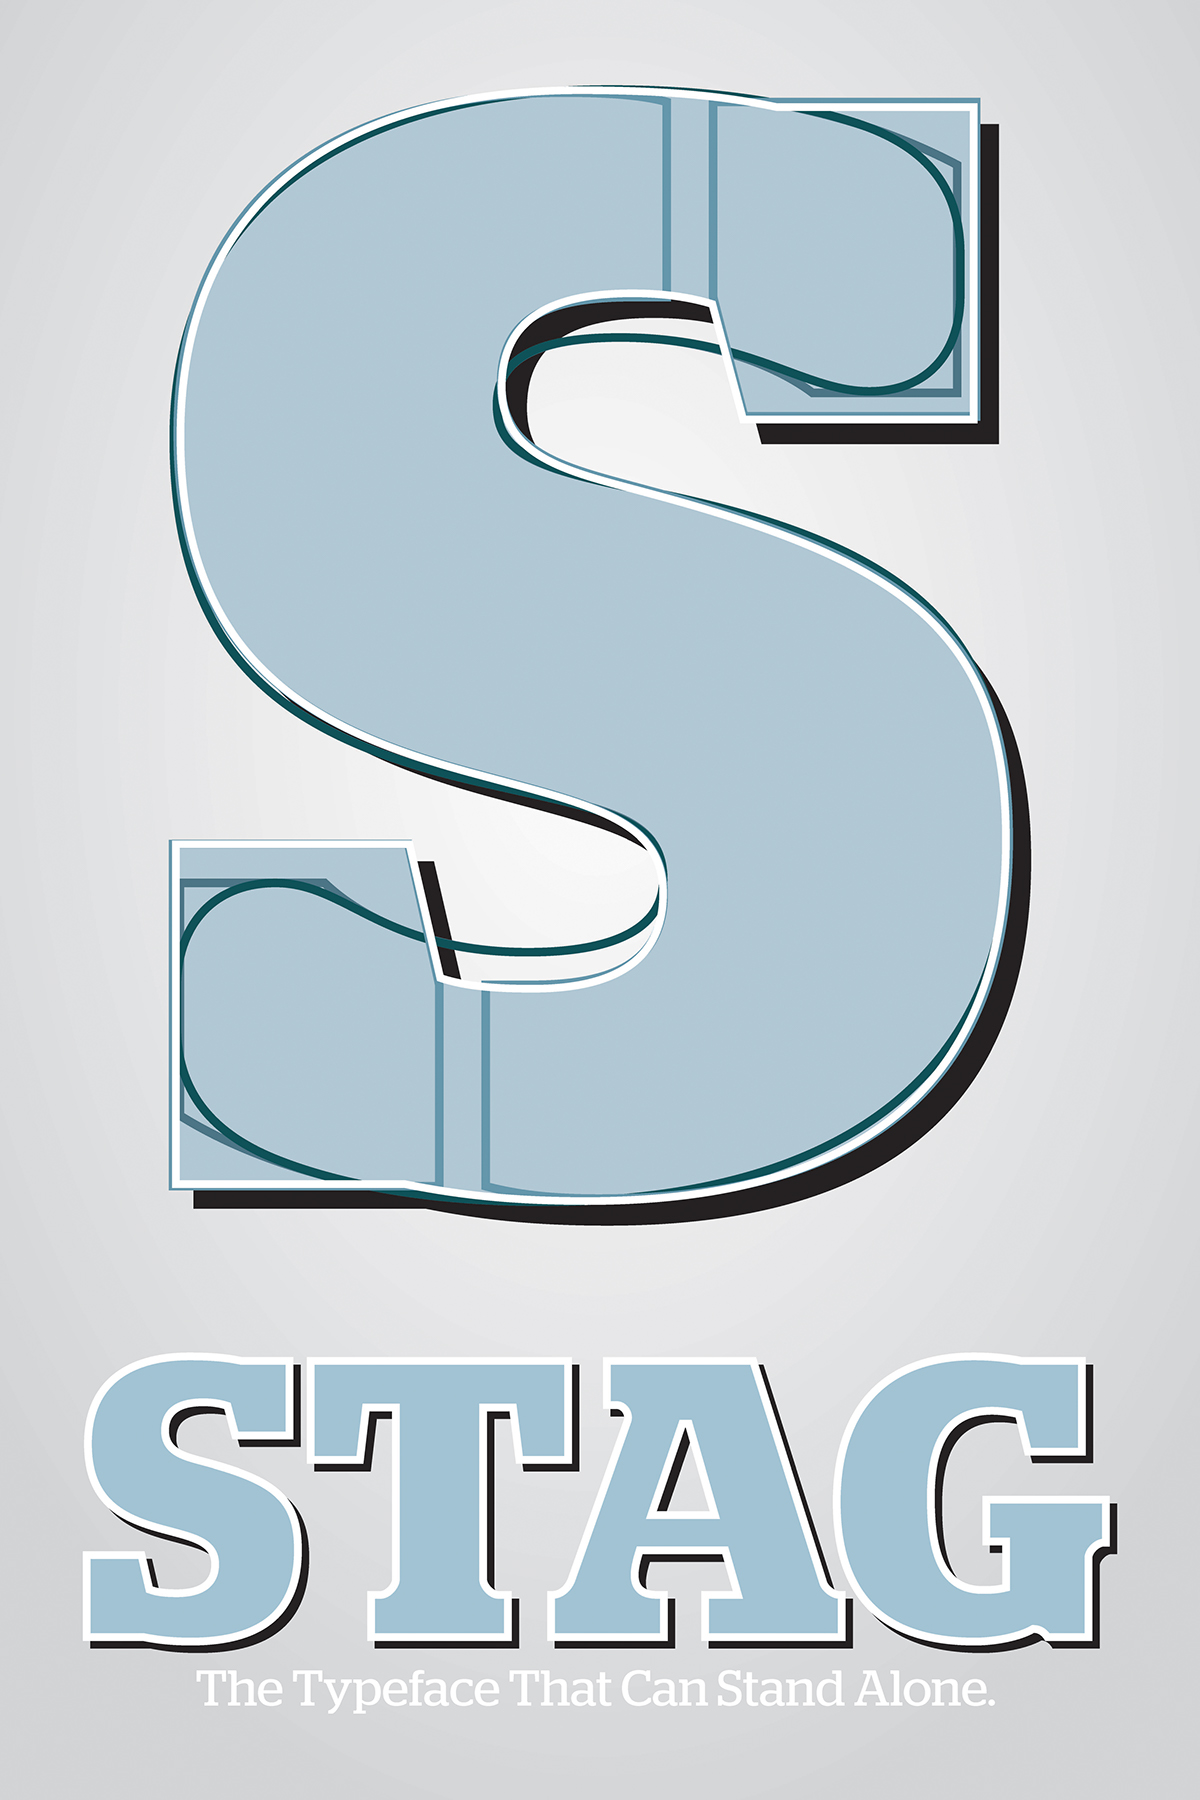 christian schwartz Stag typeface typography   poster art poster advertising ILLUSTRATION  Advertising  graphic design  art direction  typography poster